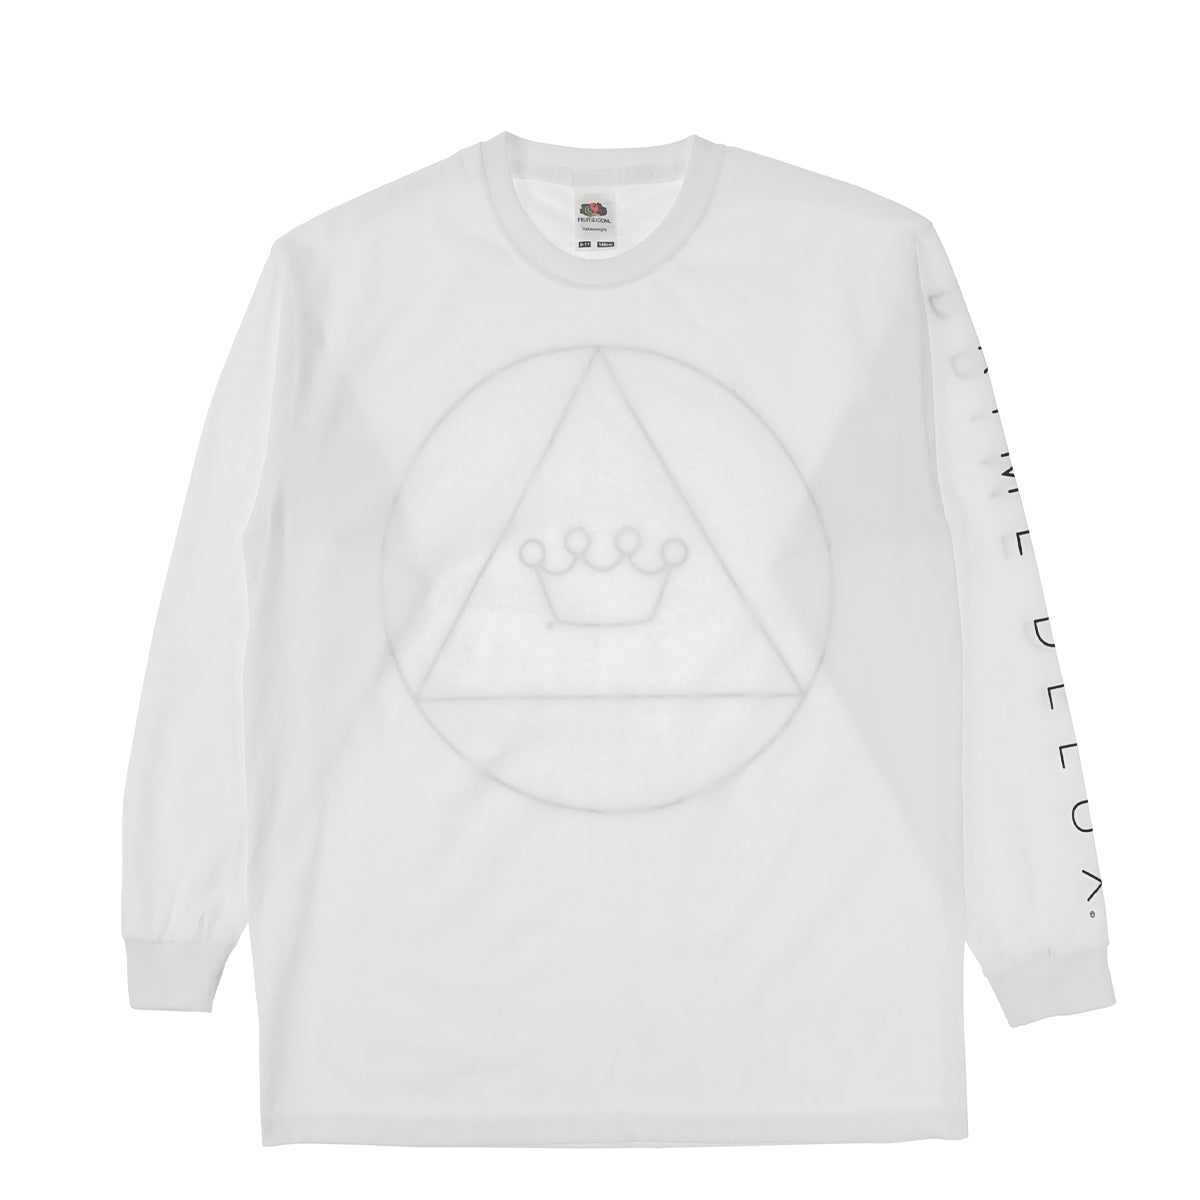 Prime Delux Unity Long Sleeve Kids T Shirt - White / Black - Prime Delux Store